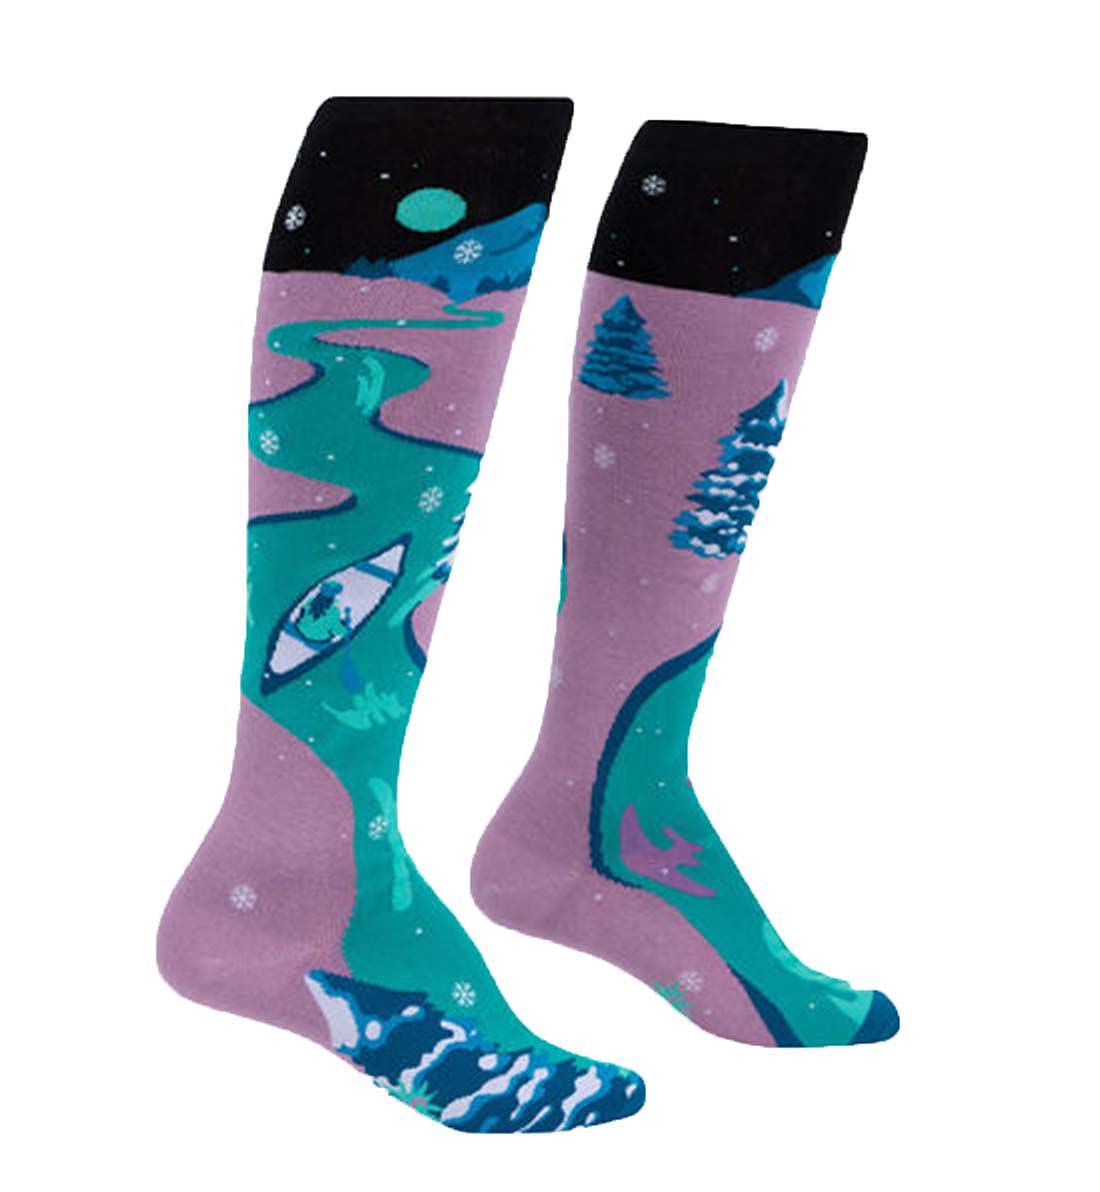 SOCK it to me Unisex Knee High Socks (f0526), Canoe Moon - Canoe Moon,One Size